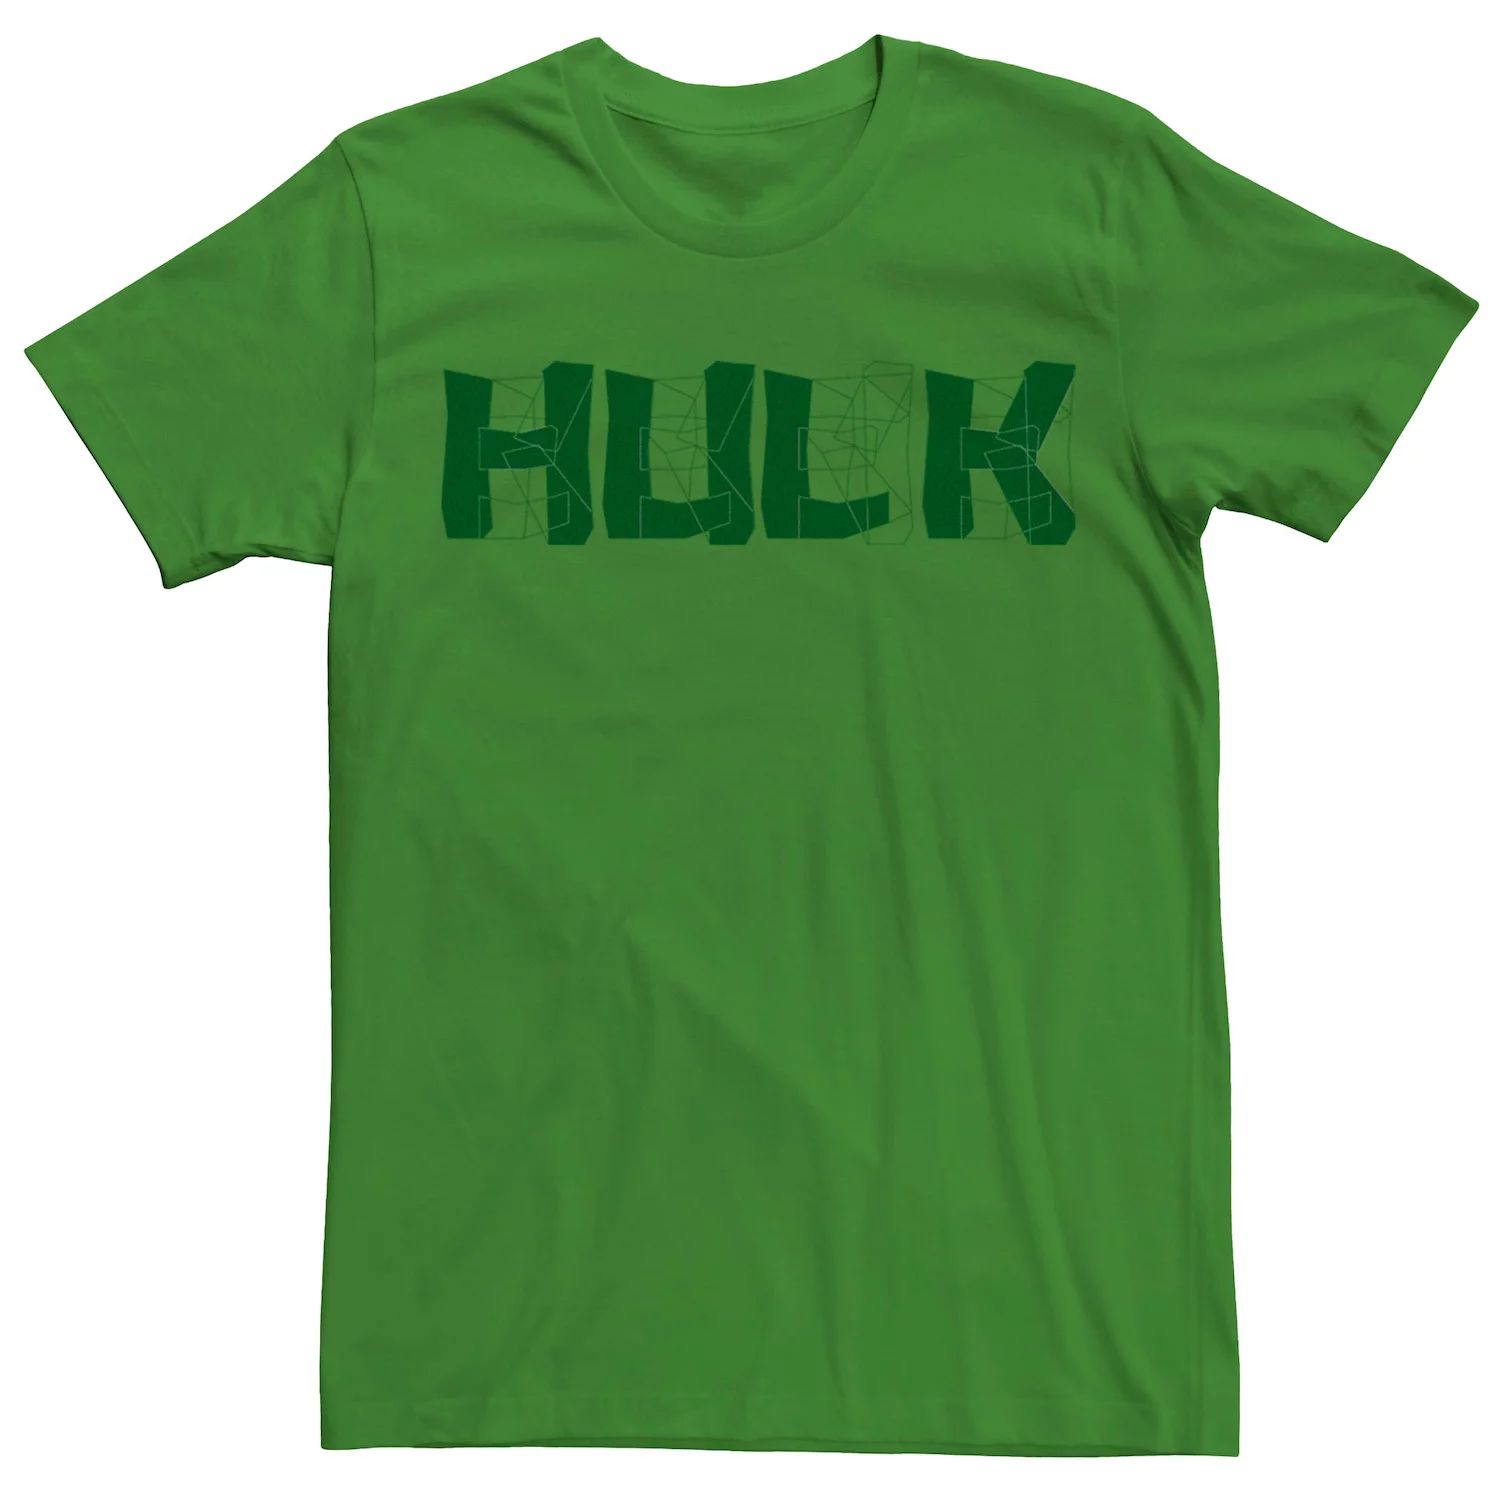 Мужская зеленая футболка с графическим логотипом Marvel Hulk Wire Overlay